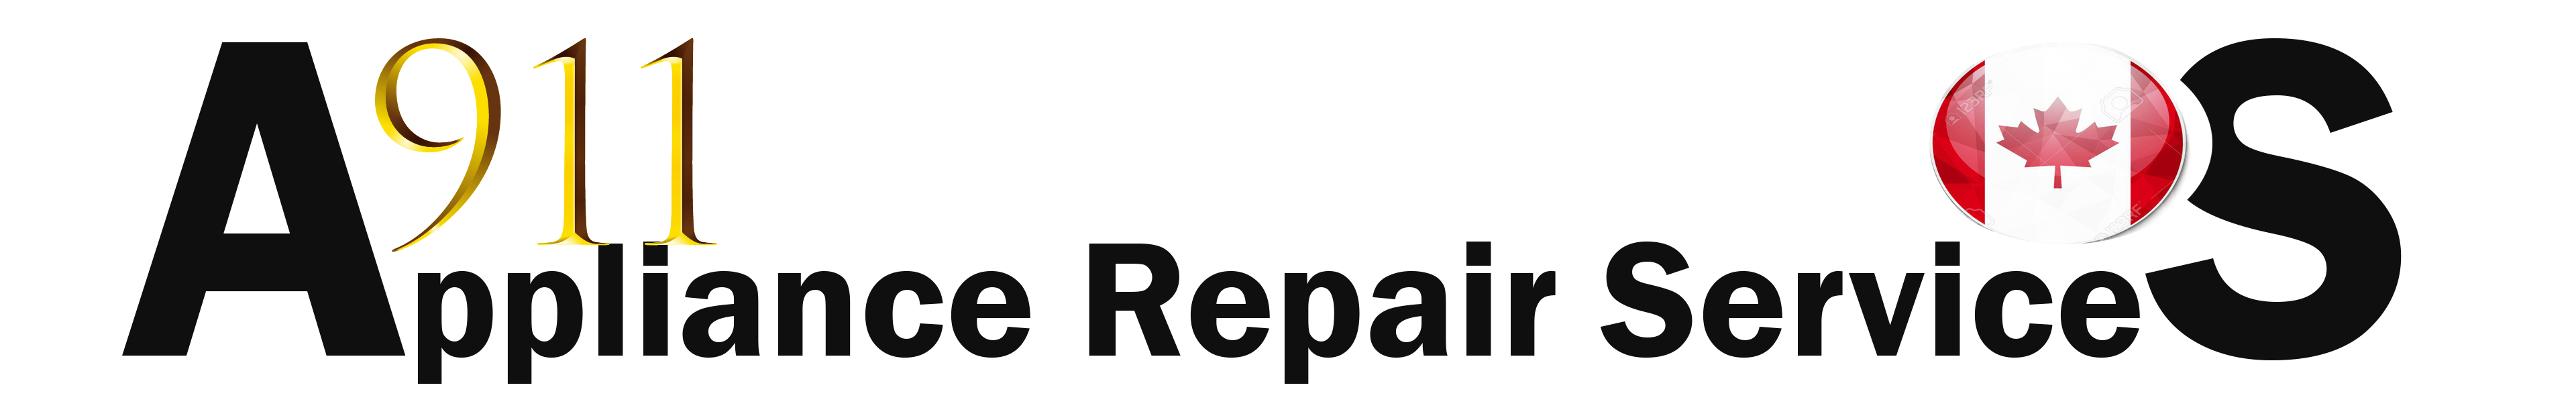 911 Appliance Repair Services's logo